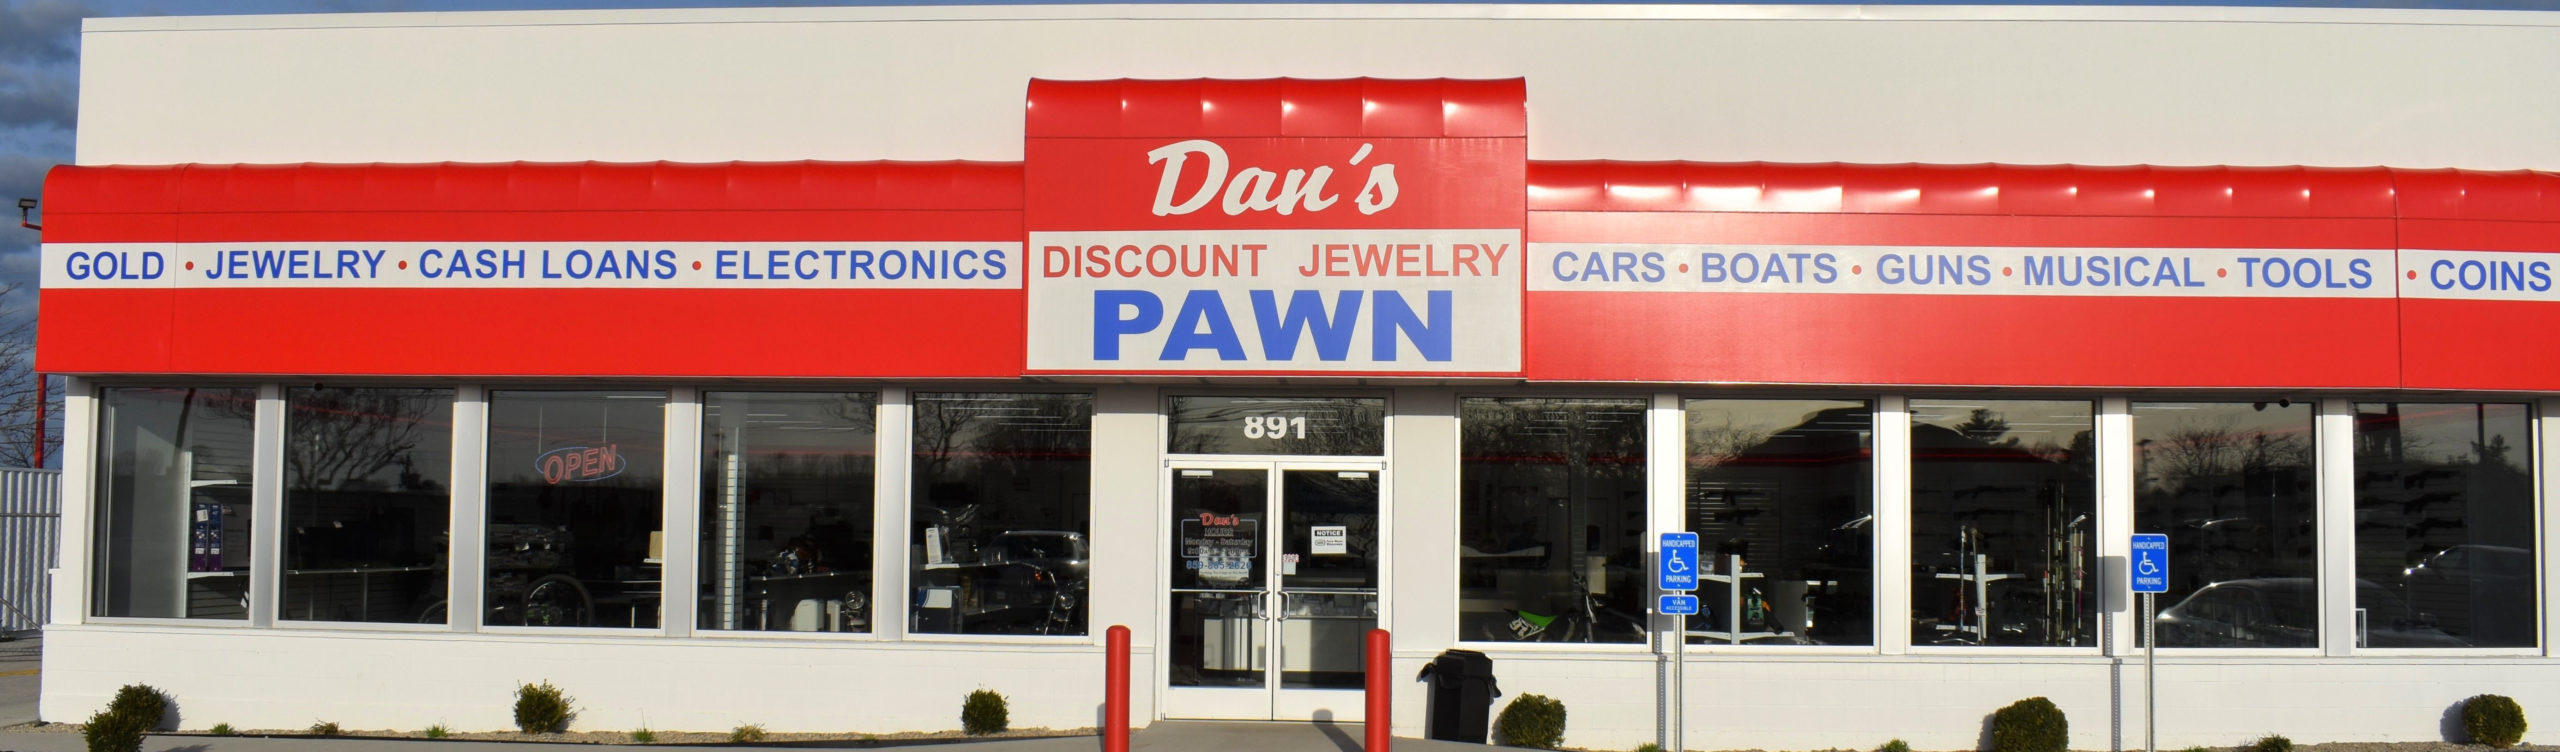 Dans Pawn Discount Store Front